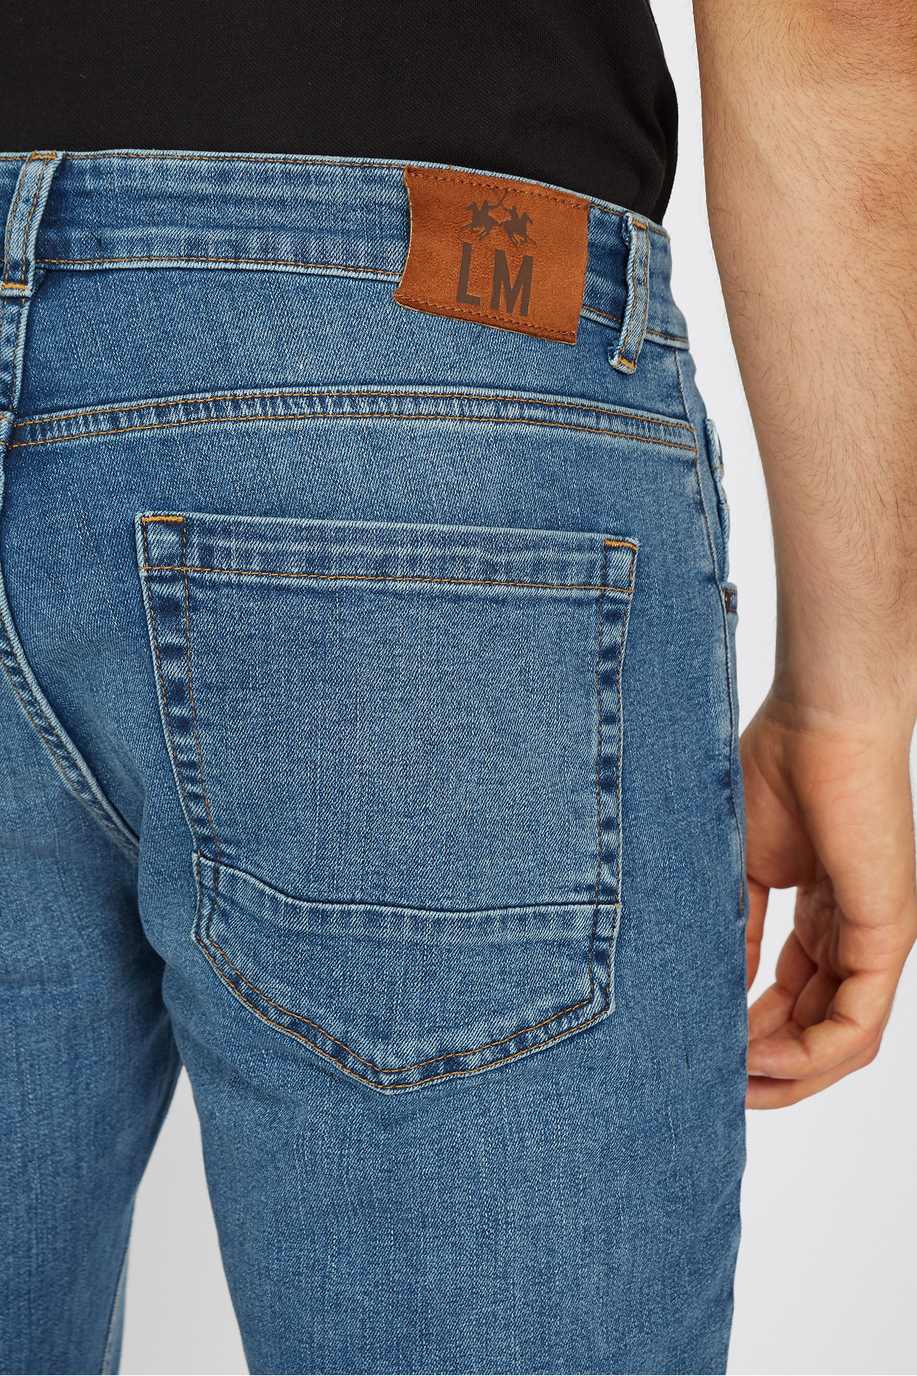 Pantalone da uomo denim 5 tasche misto cotone regular fit- Vangy - Essential | La Martina - Official Online Shop